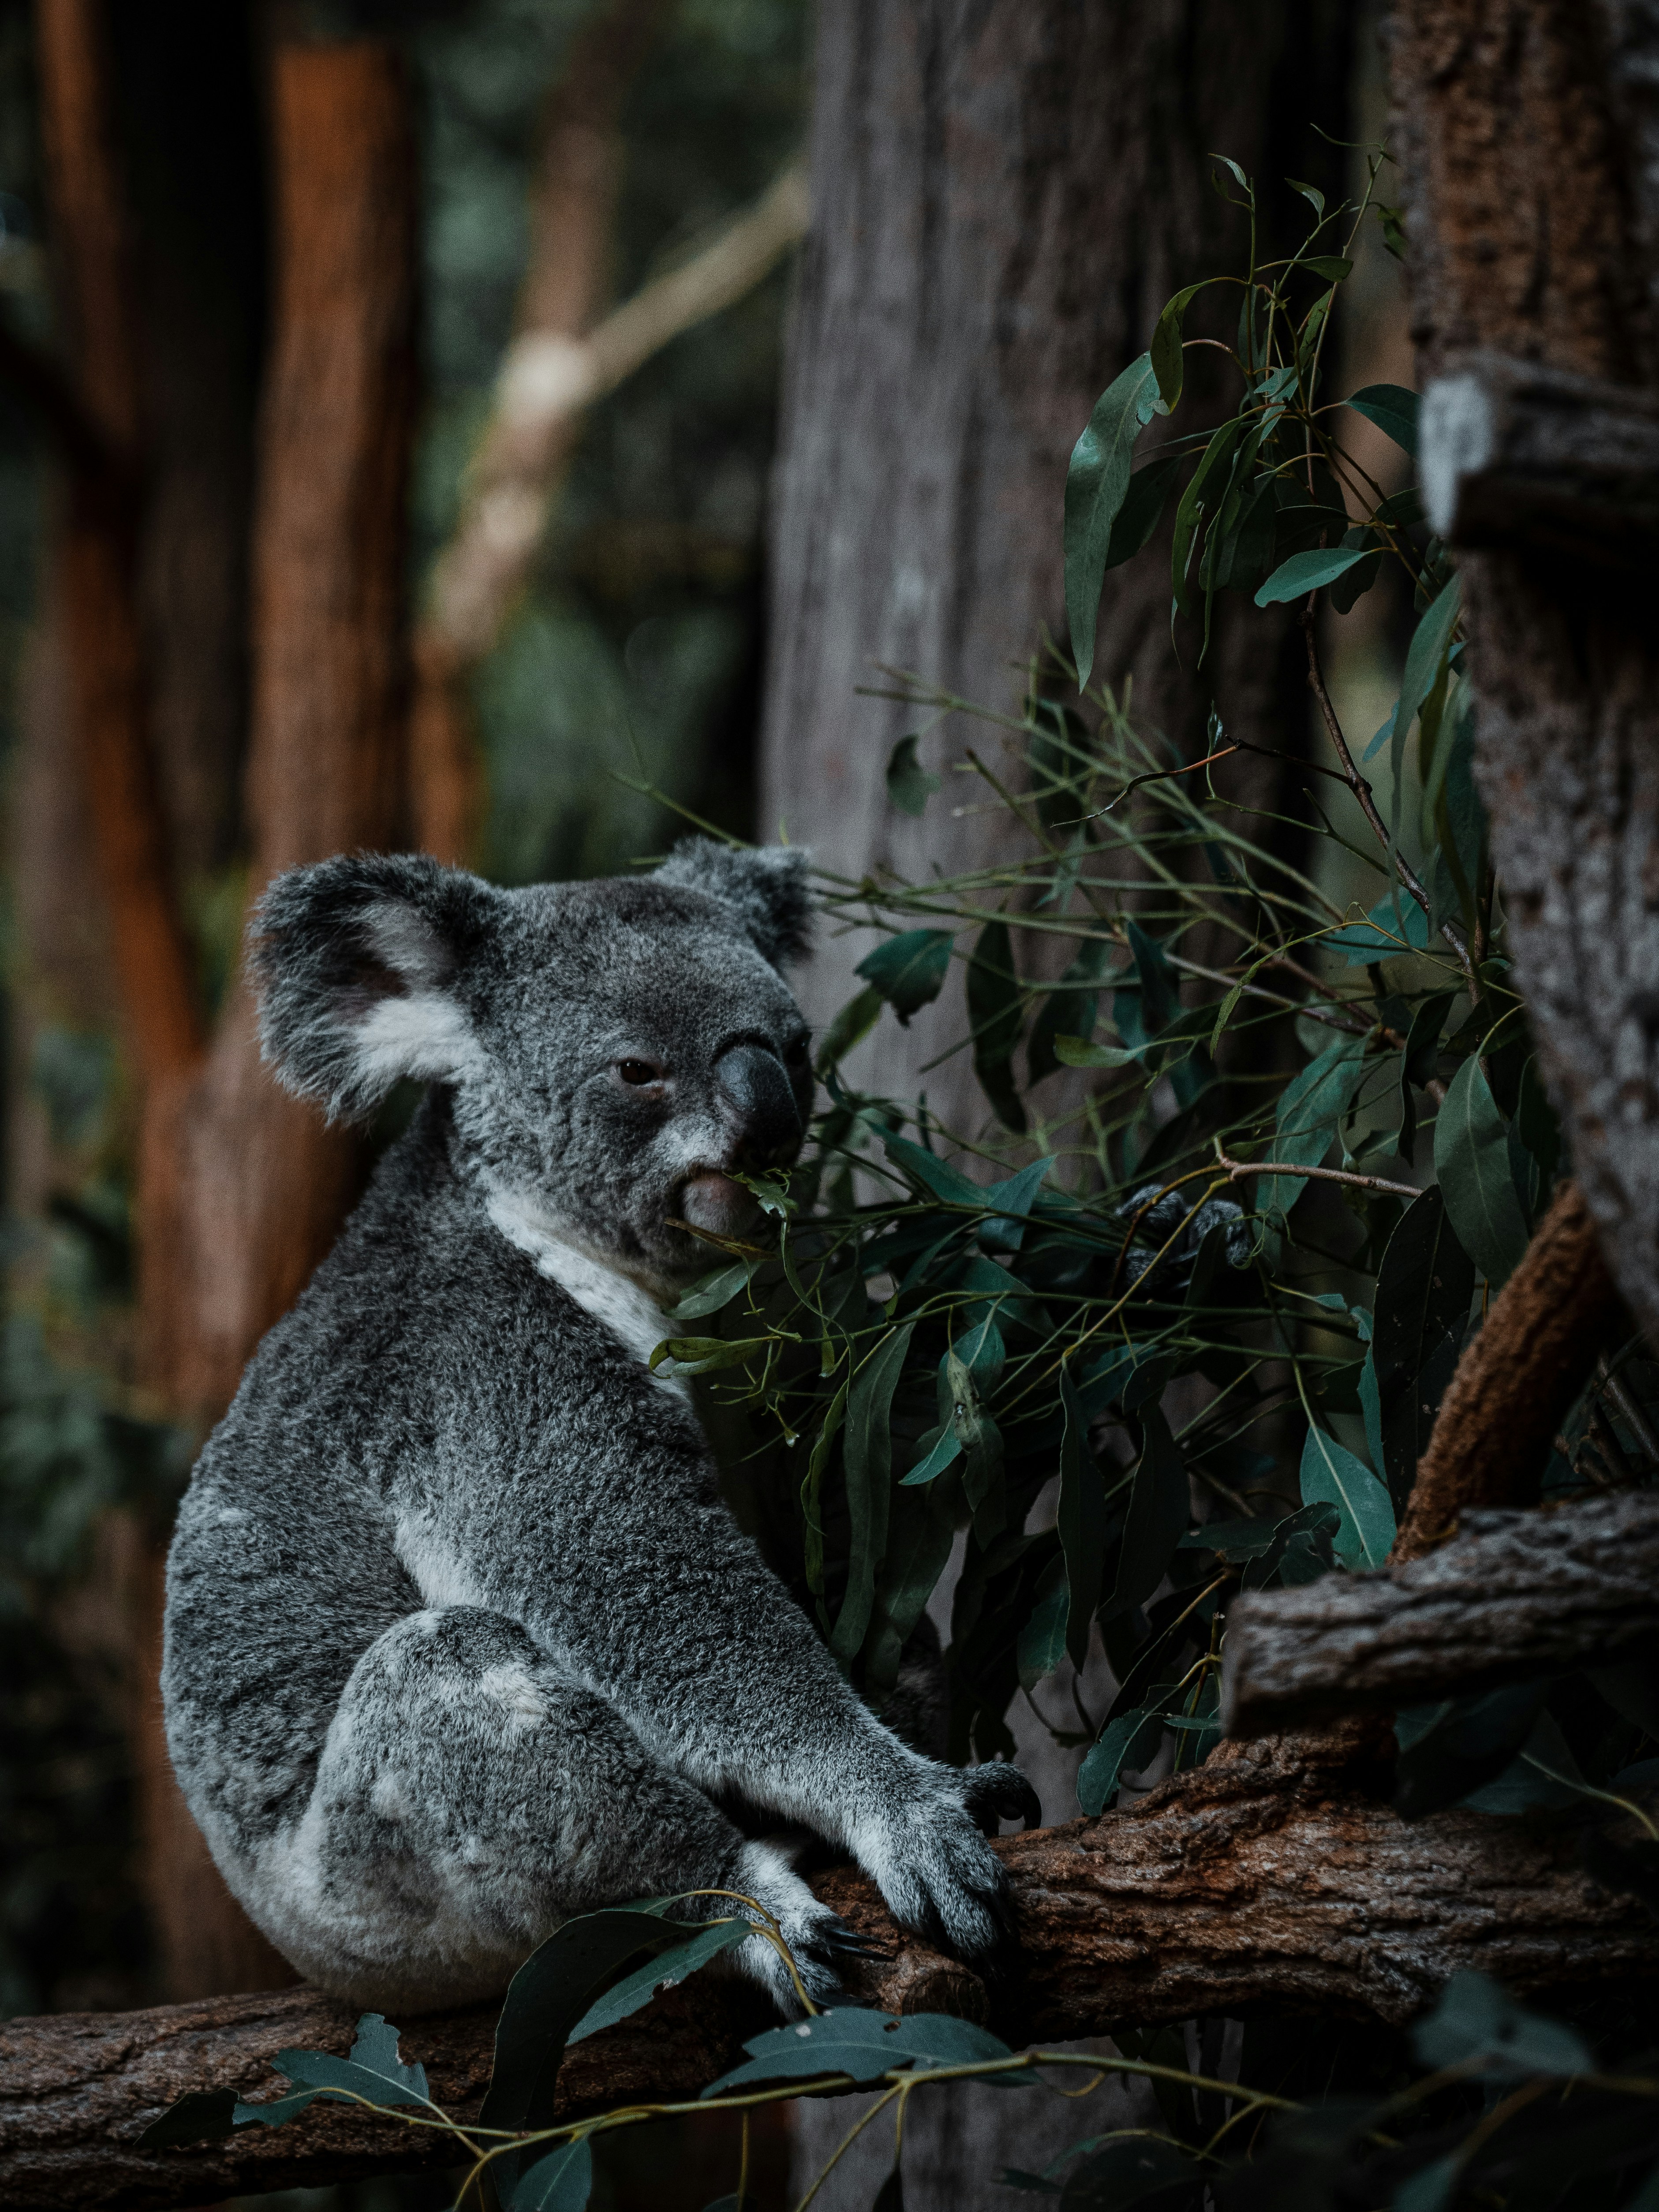 Female koala at Australia Zoo, Beerwah Australia. Home of the Crocodile Hunter - Steve Irwin.